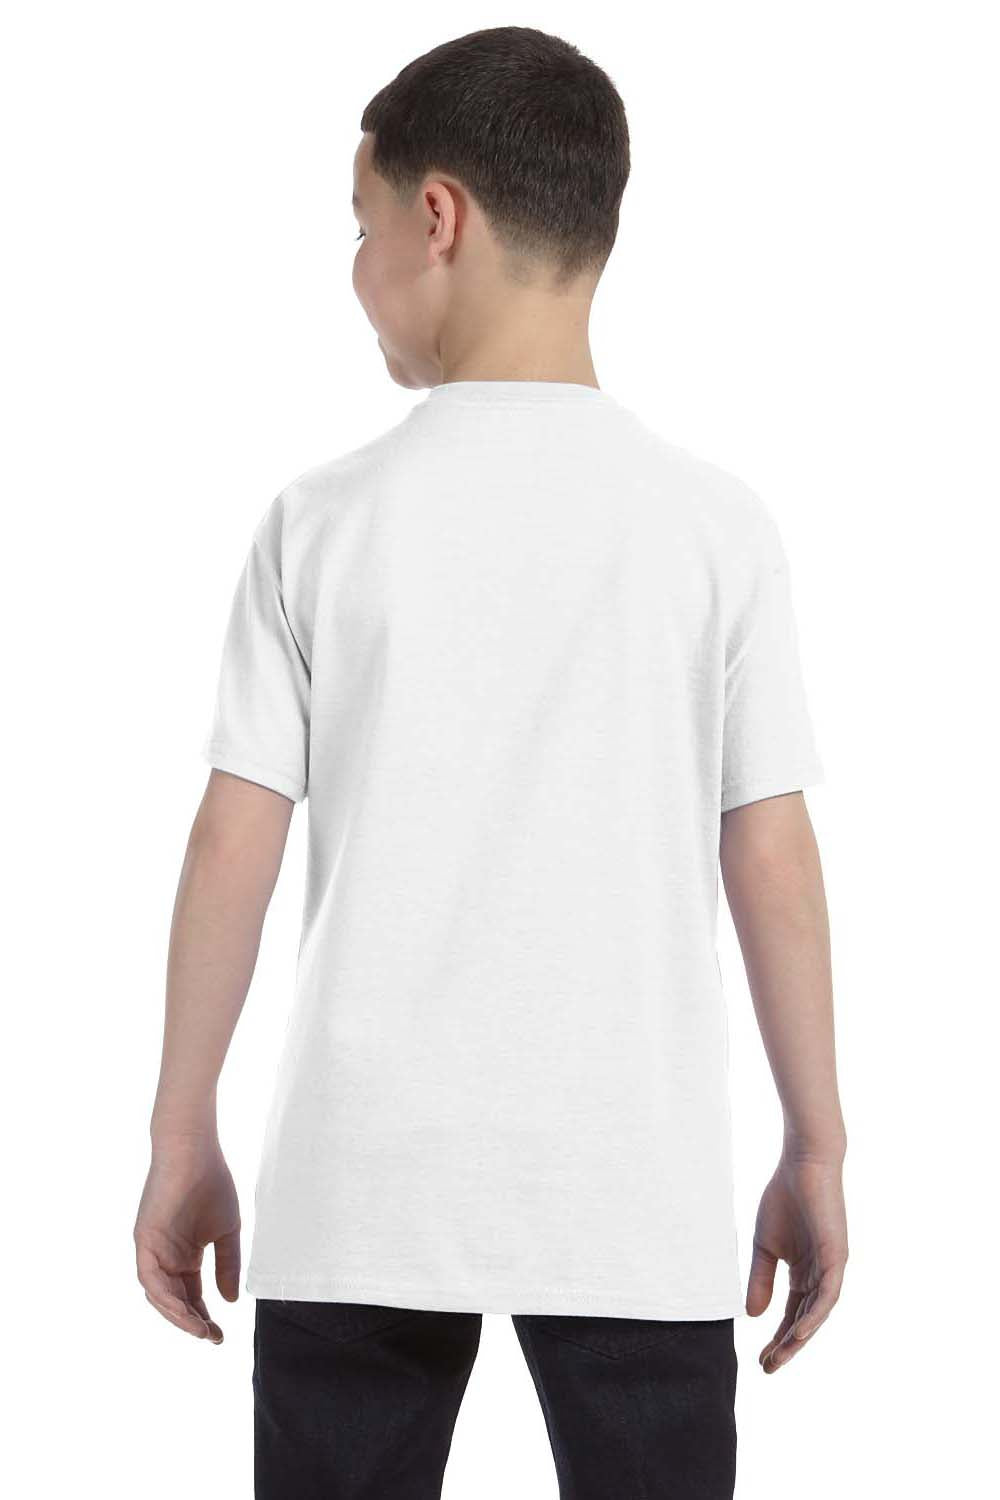 Jerzees 29B Youth Dri-Power Moisture Wicking Short Sleeve Crewneck T-Shirt White Back